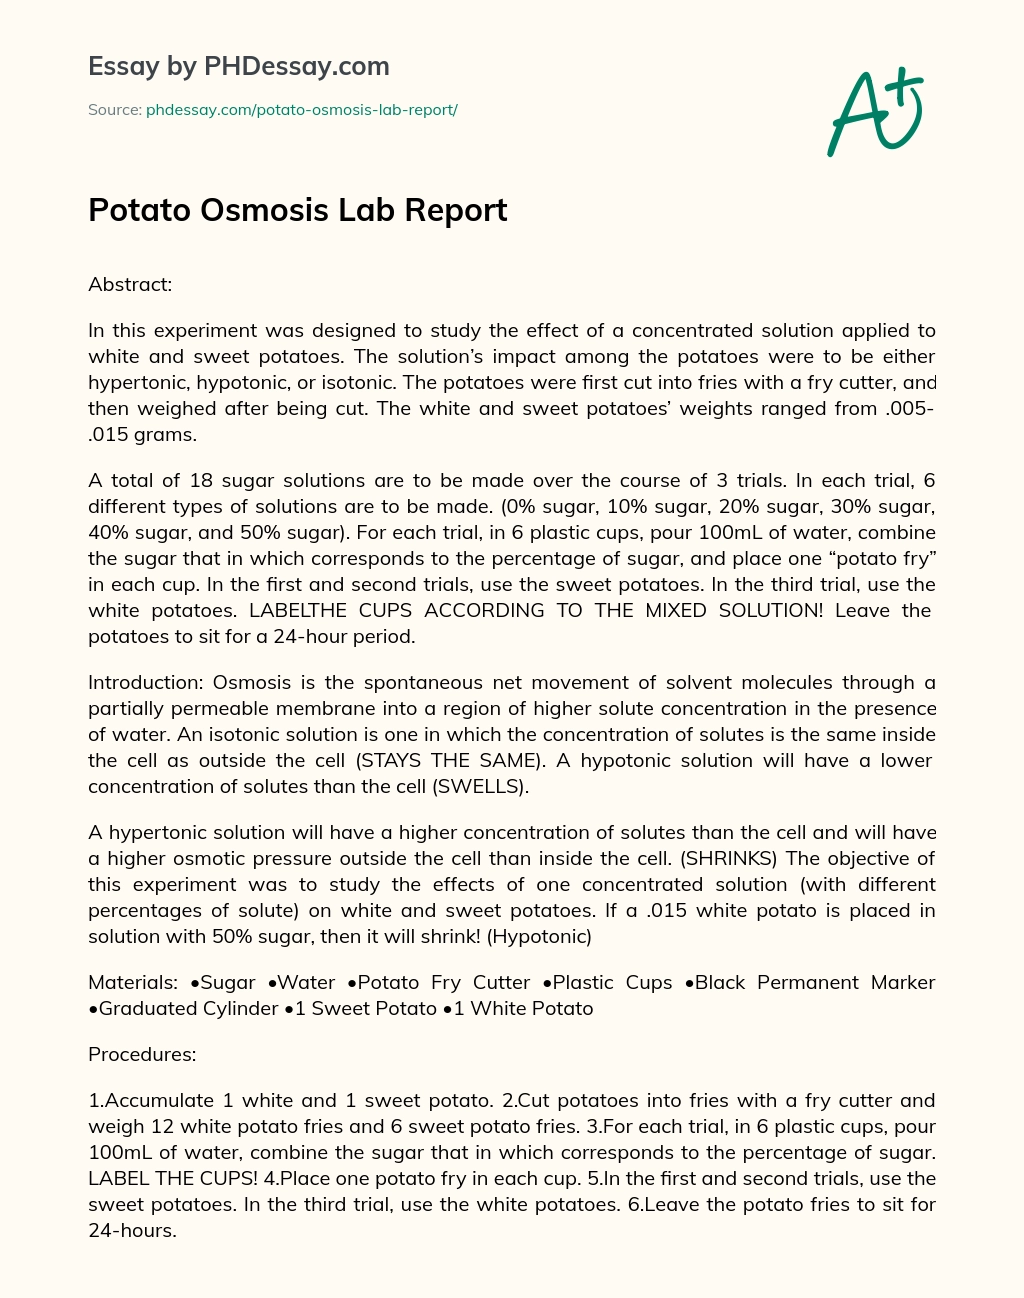 Potato Osmosis Lab Report essay